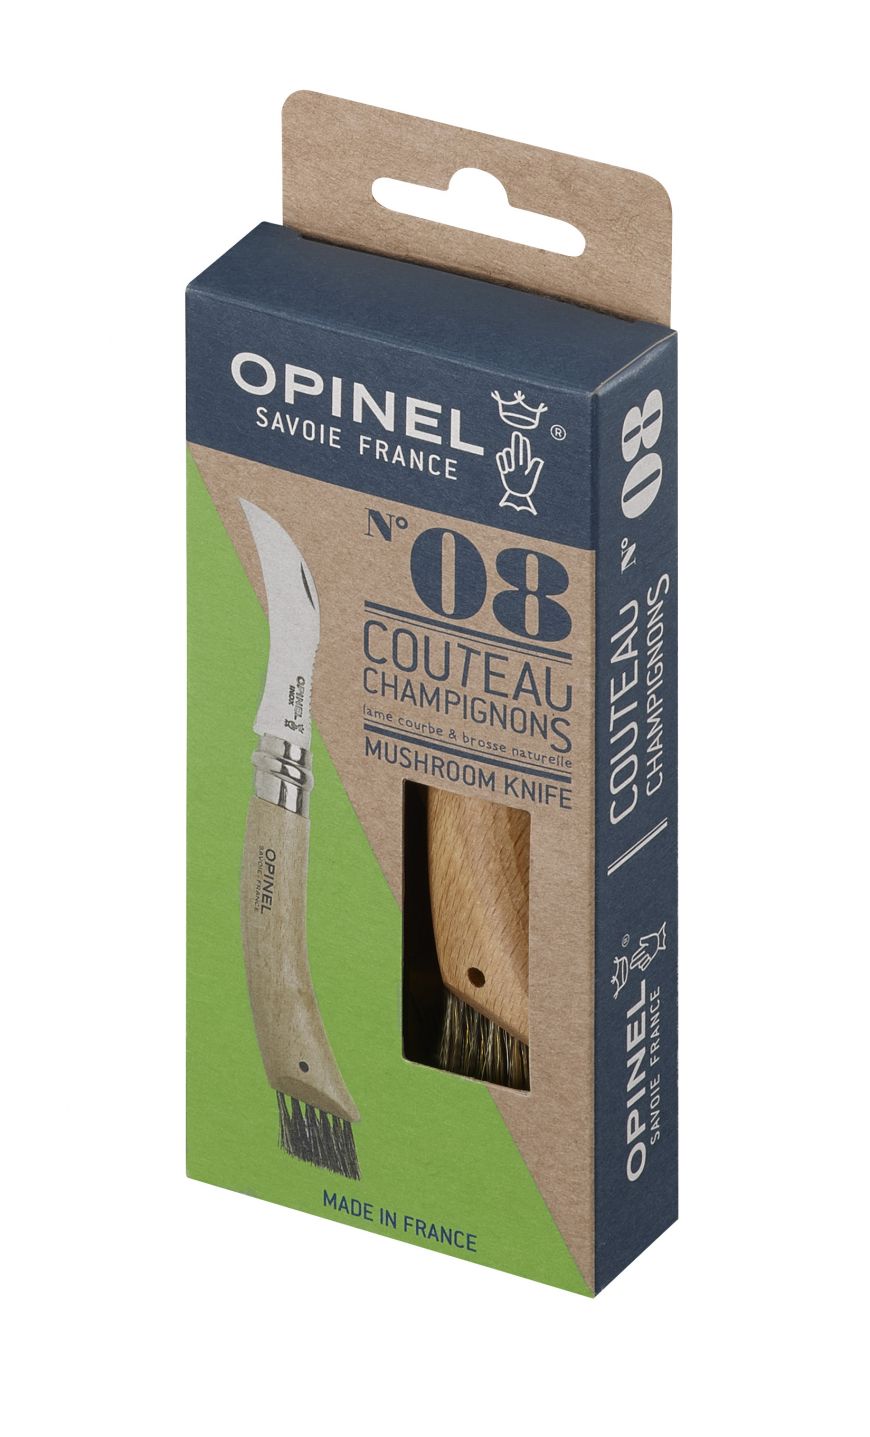 Couteau à champignons n°8 - Opinel